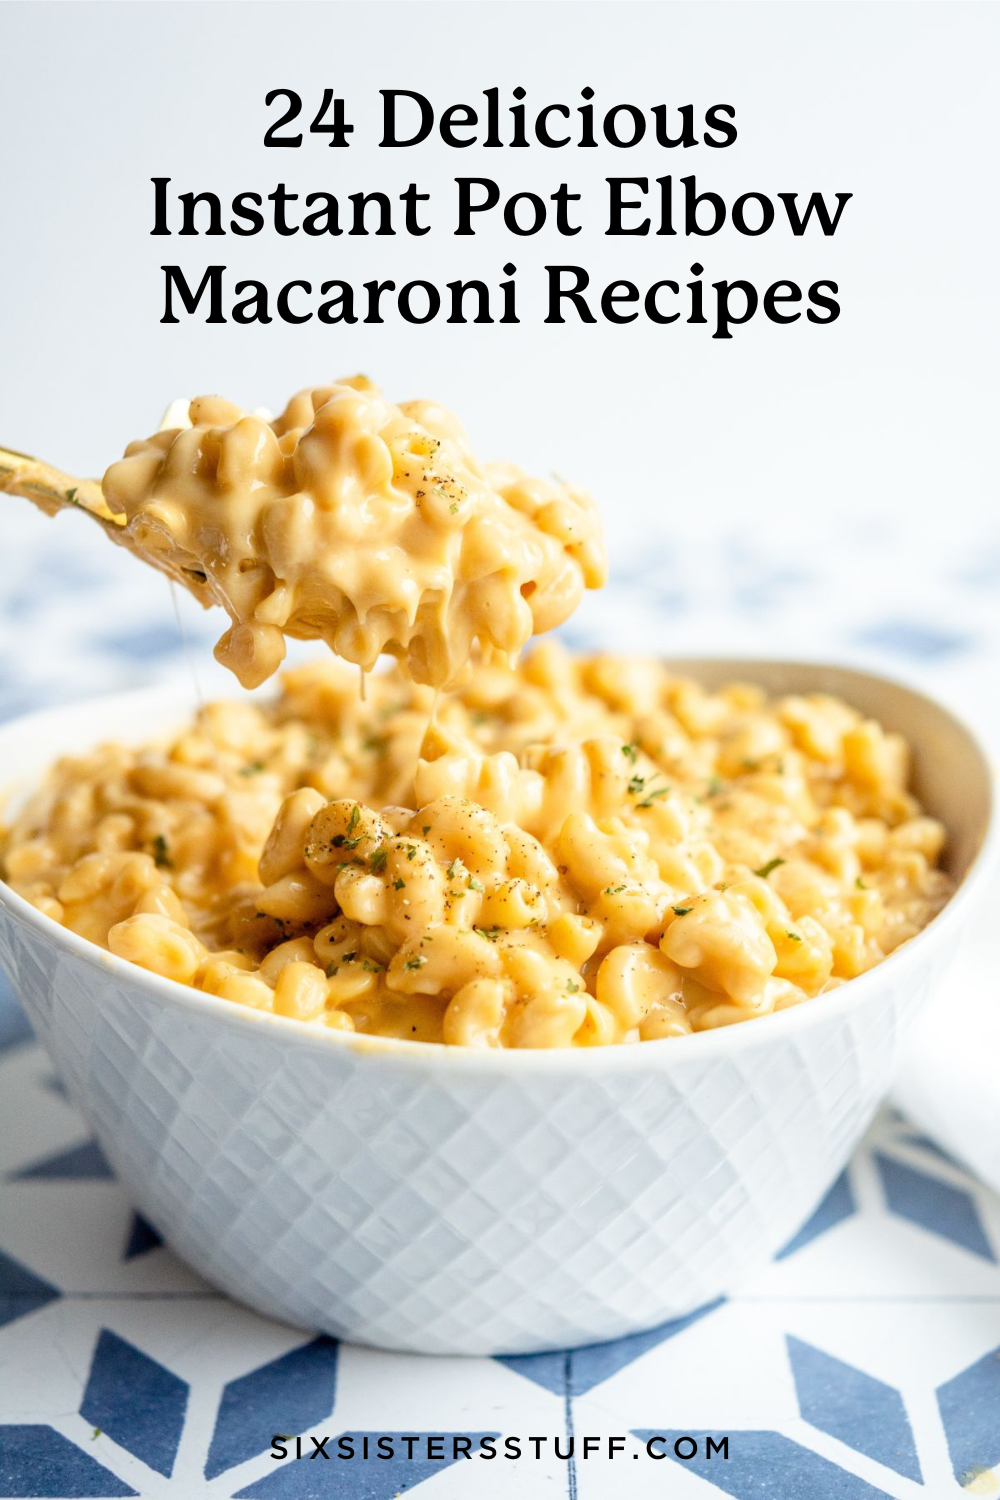 24 Delicious Instant Pot Elbow Macaroni Recipes